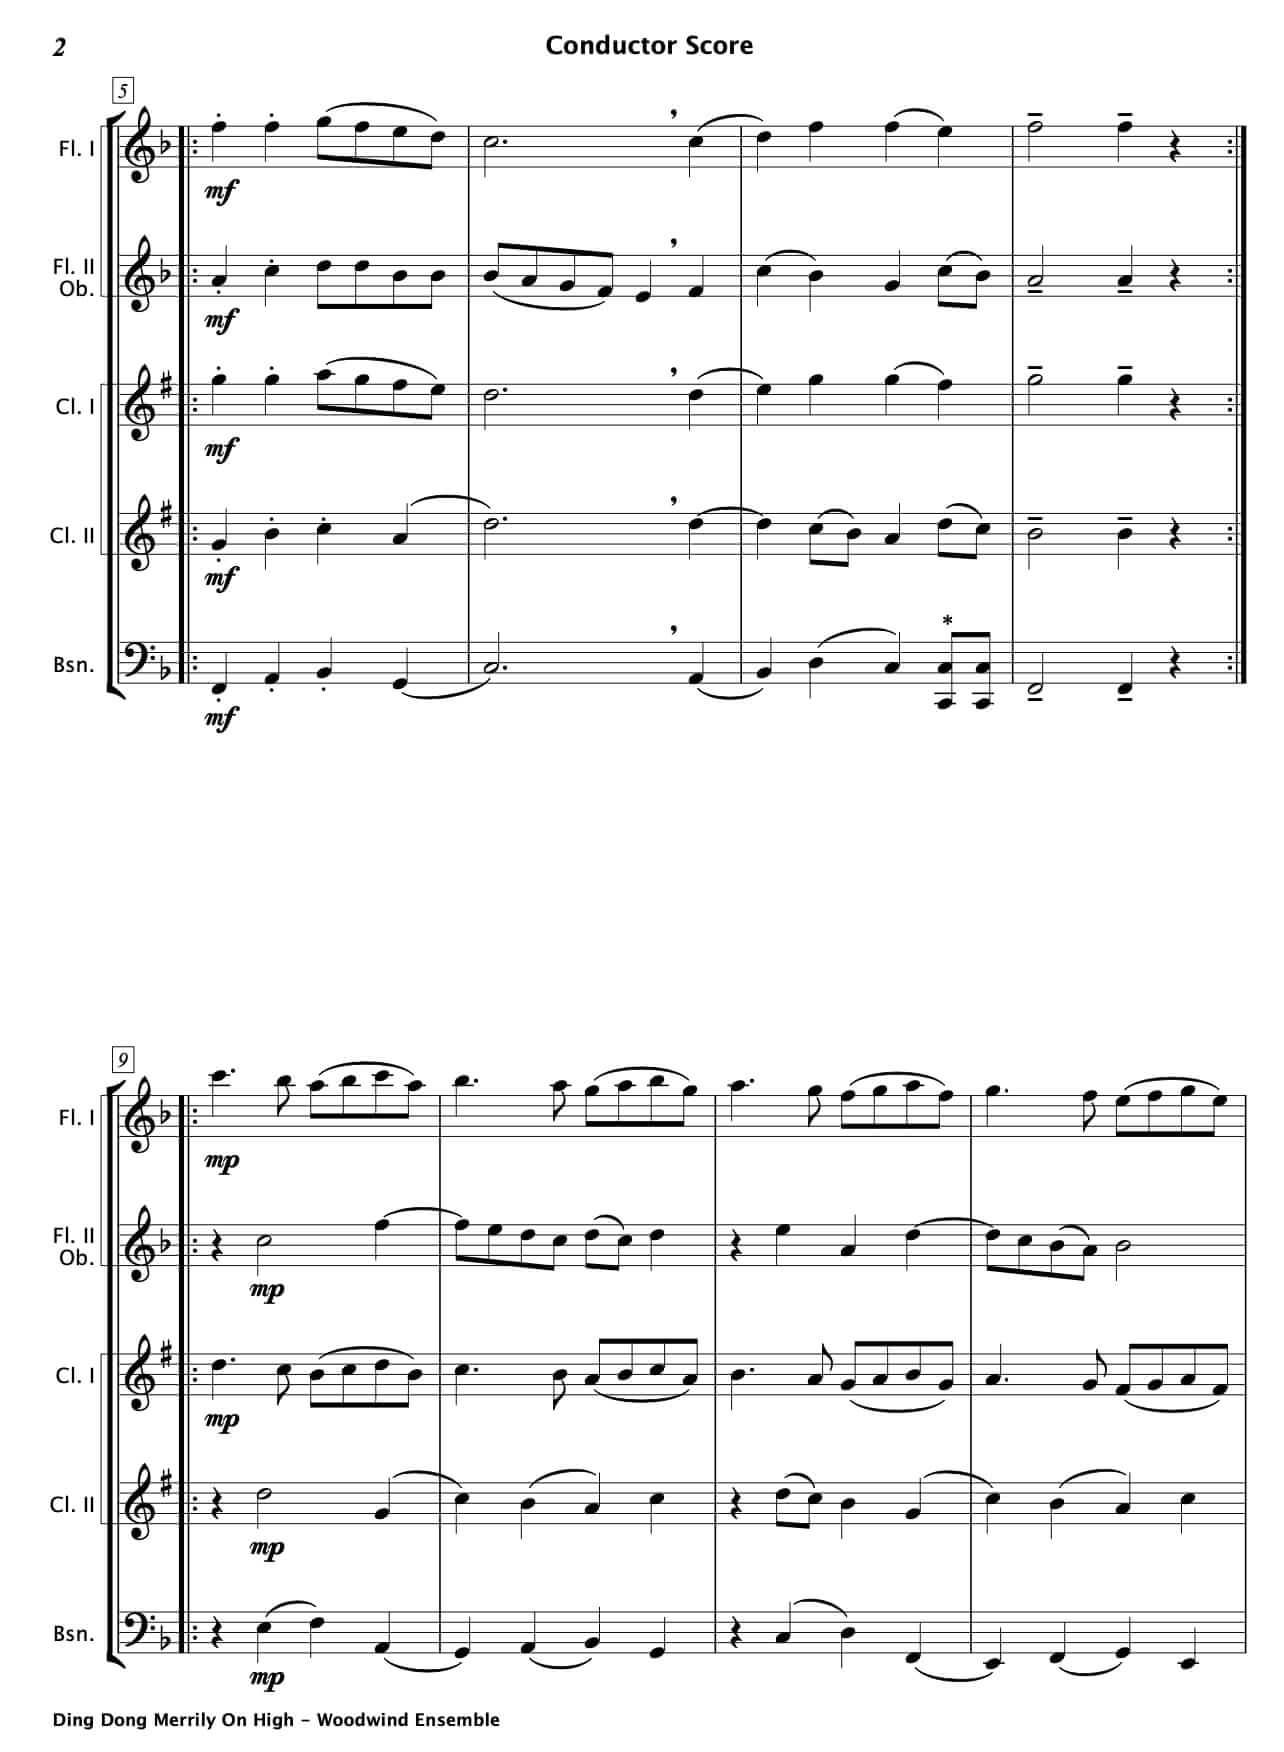 Ding Dong Merrily On High (Woodwind Ensemble) - Paul Barker Music 